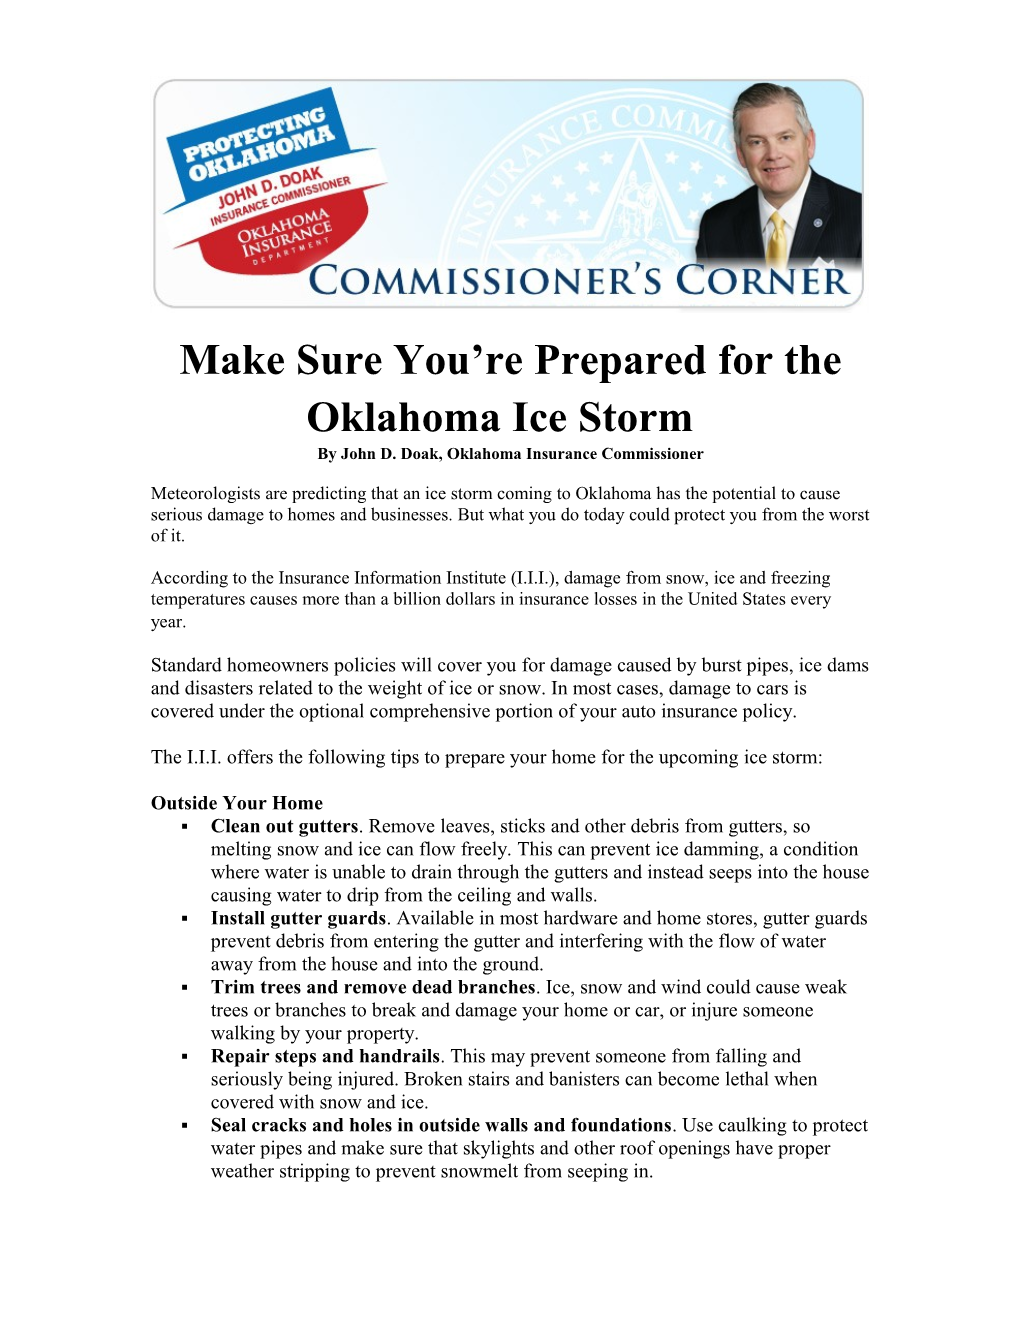 Make Sure You Re Prepared for the Oklahoma Ice Storm by John D. Doak, Oklahoma Insurance